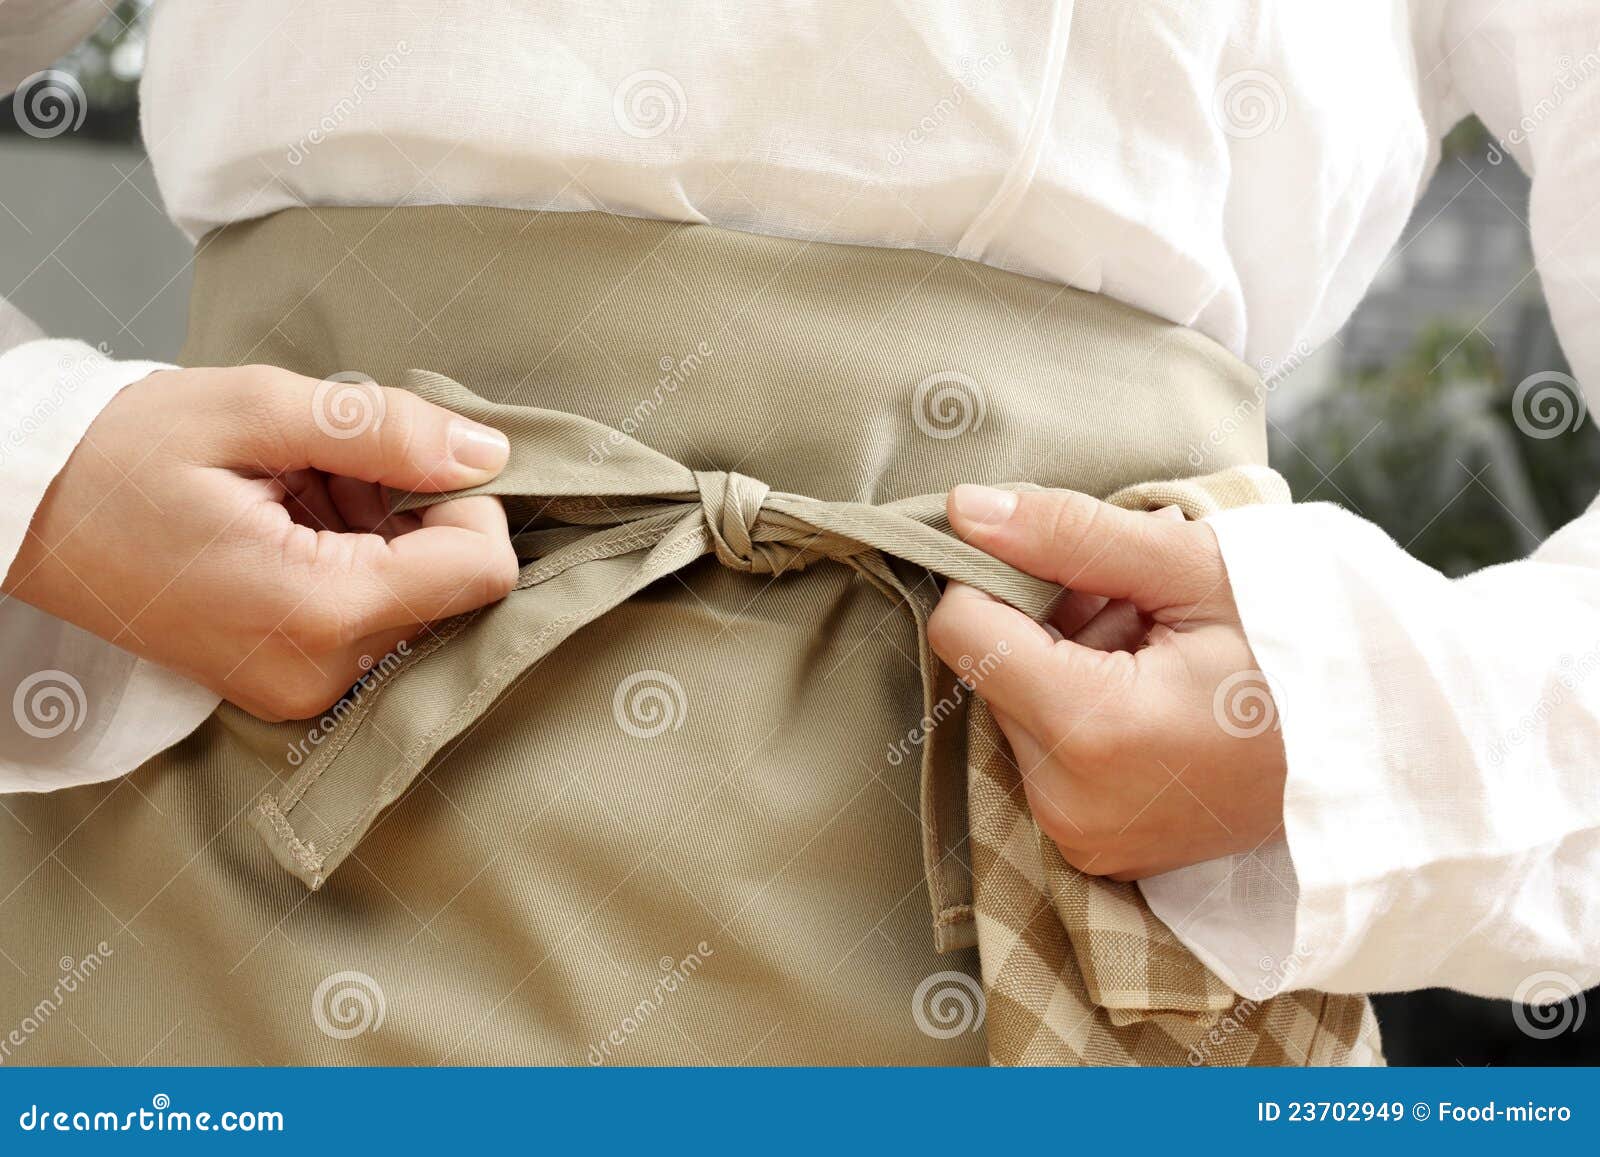 tying an apron around the waist